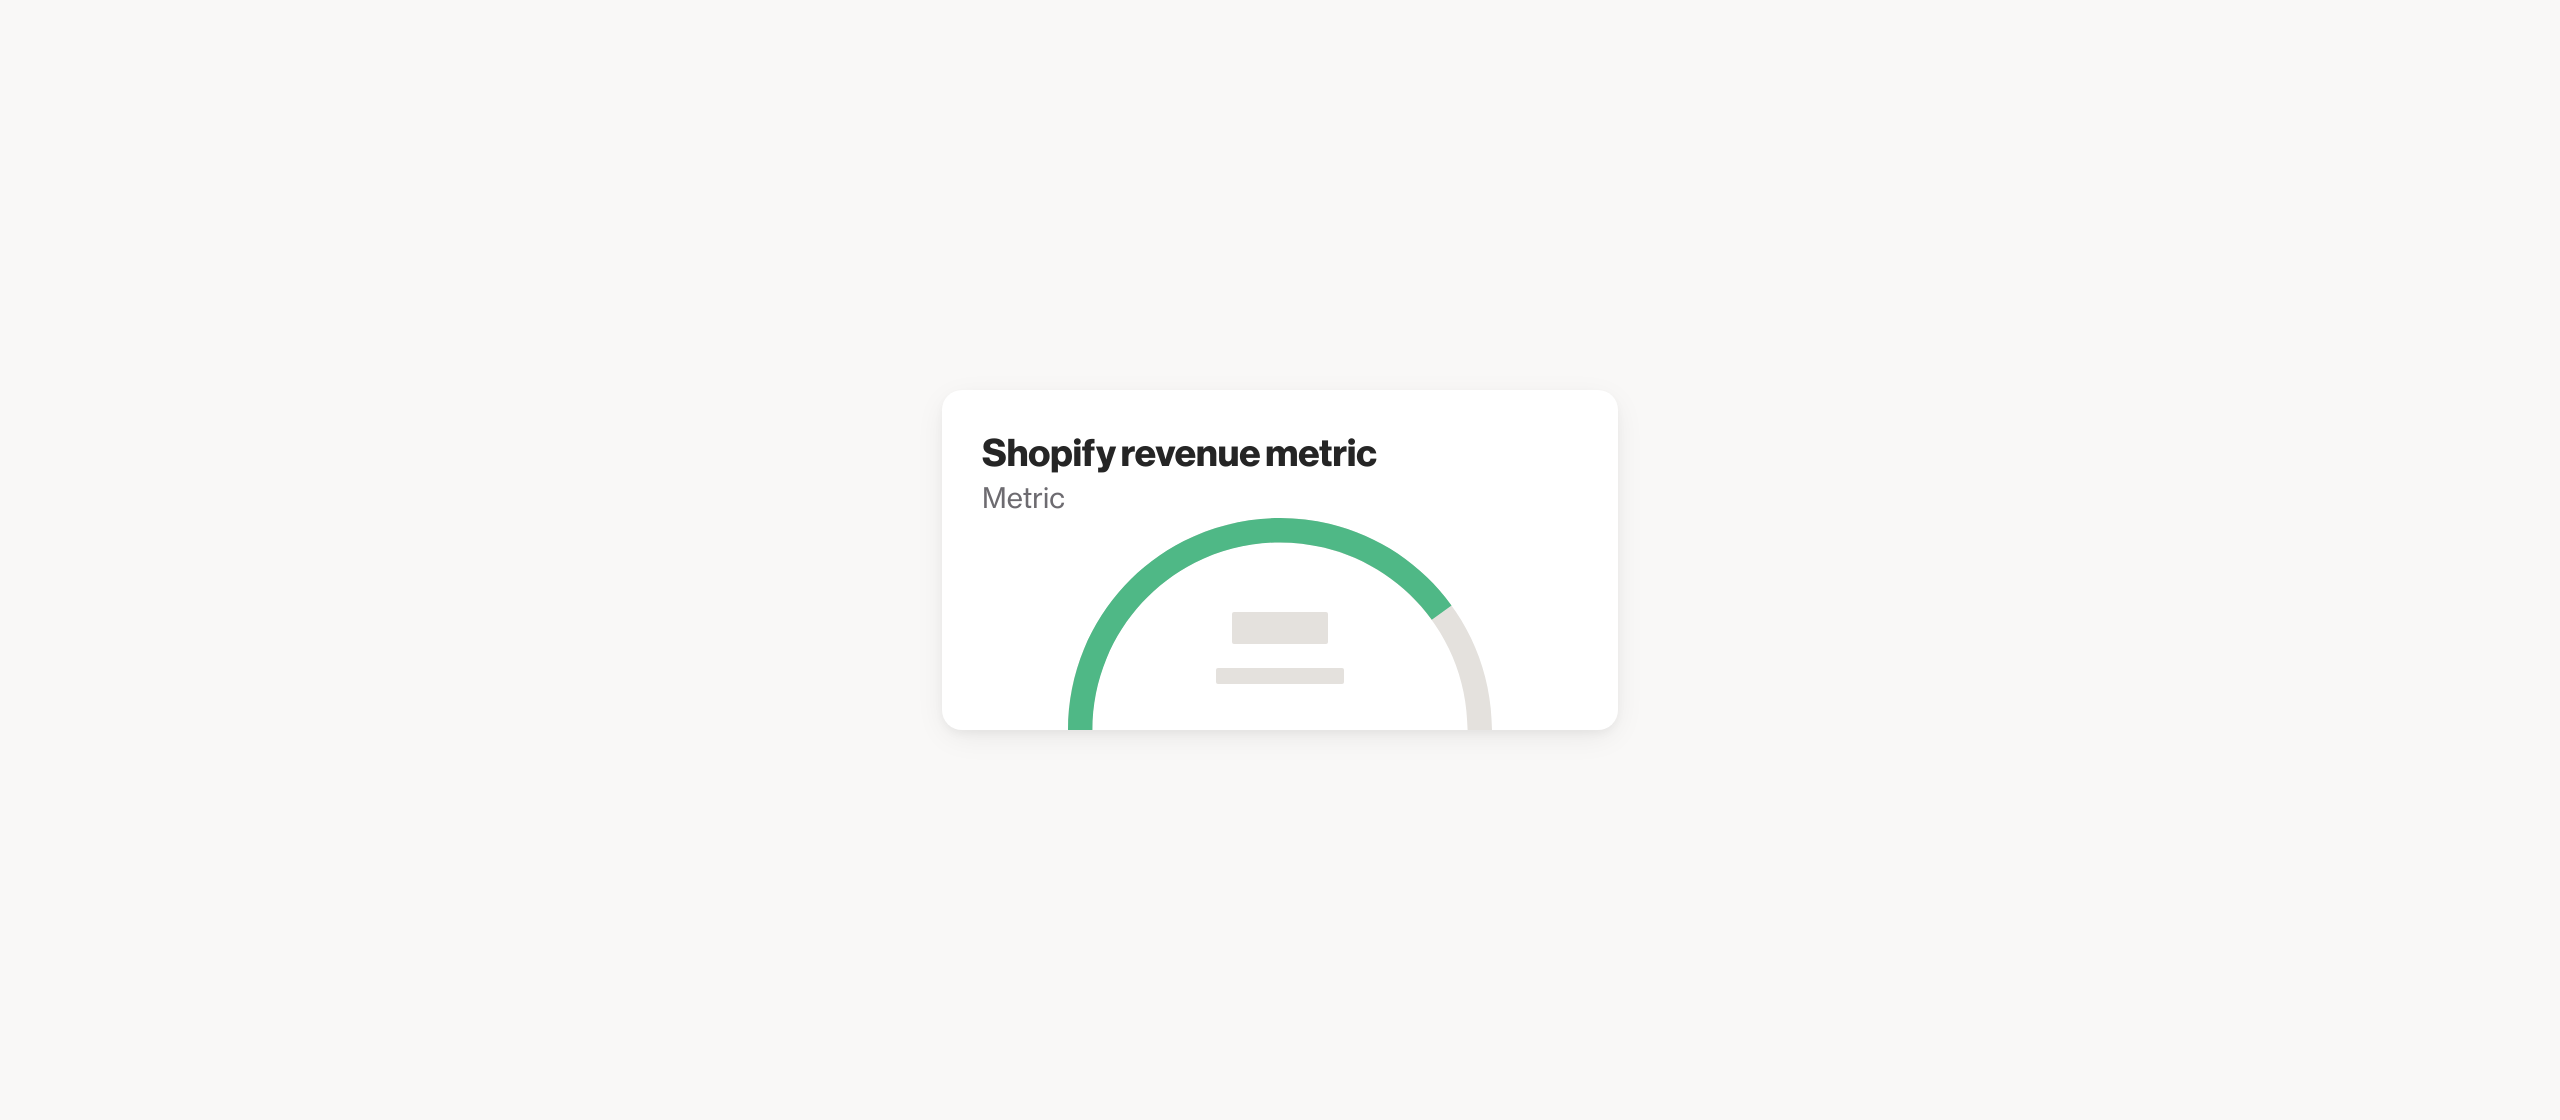 Shopify total revenue